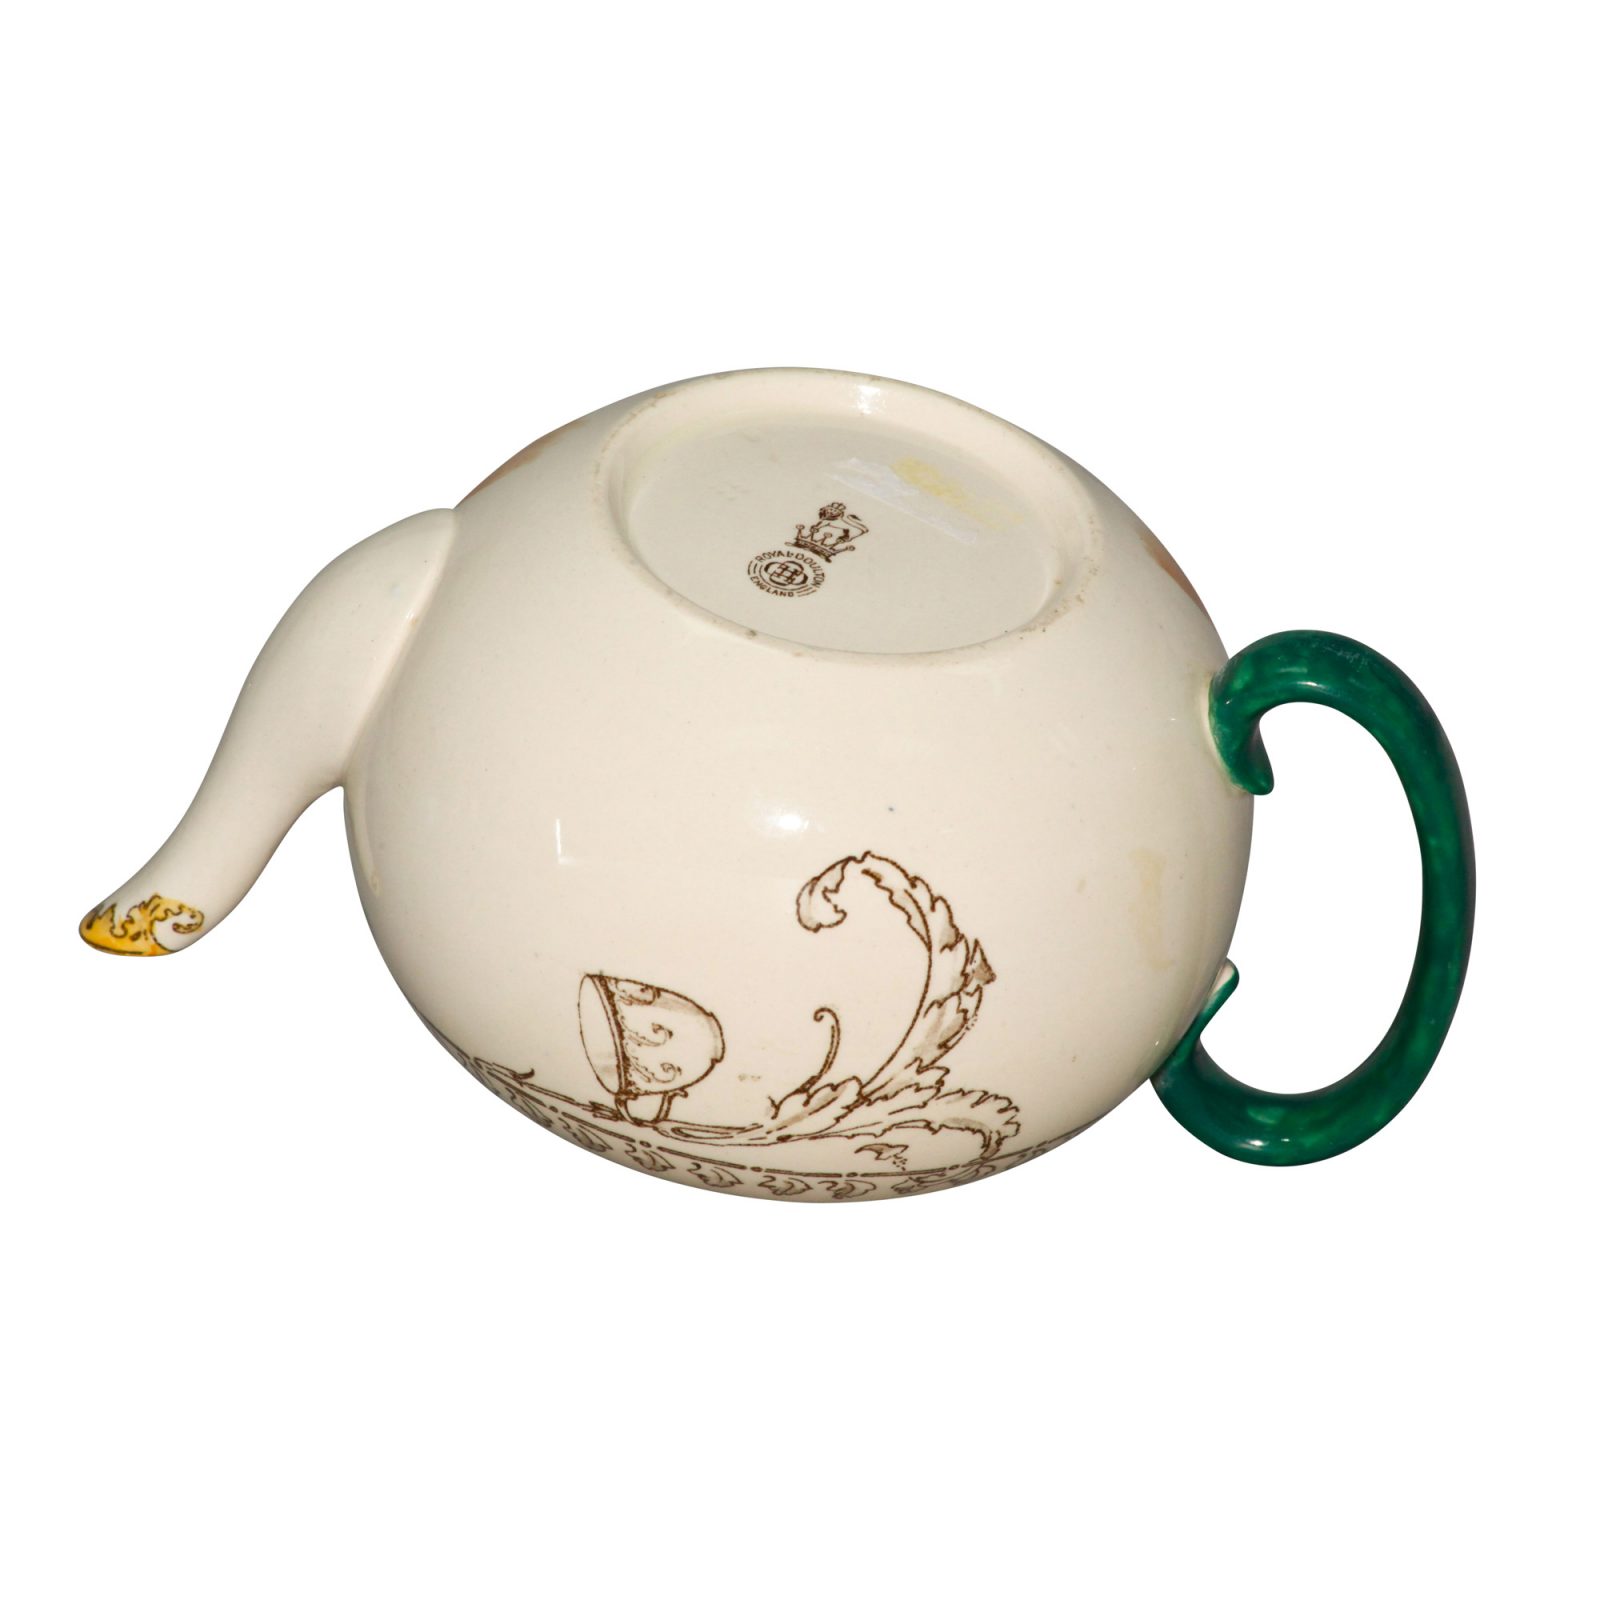 Teapot "Monks and Mottoes" - Royal Doulton Seriesware